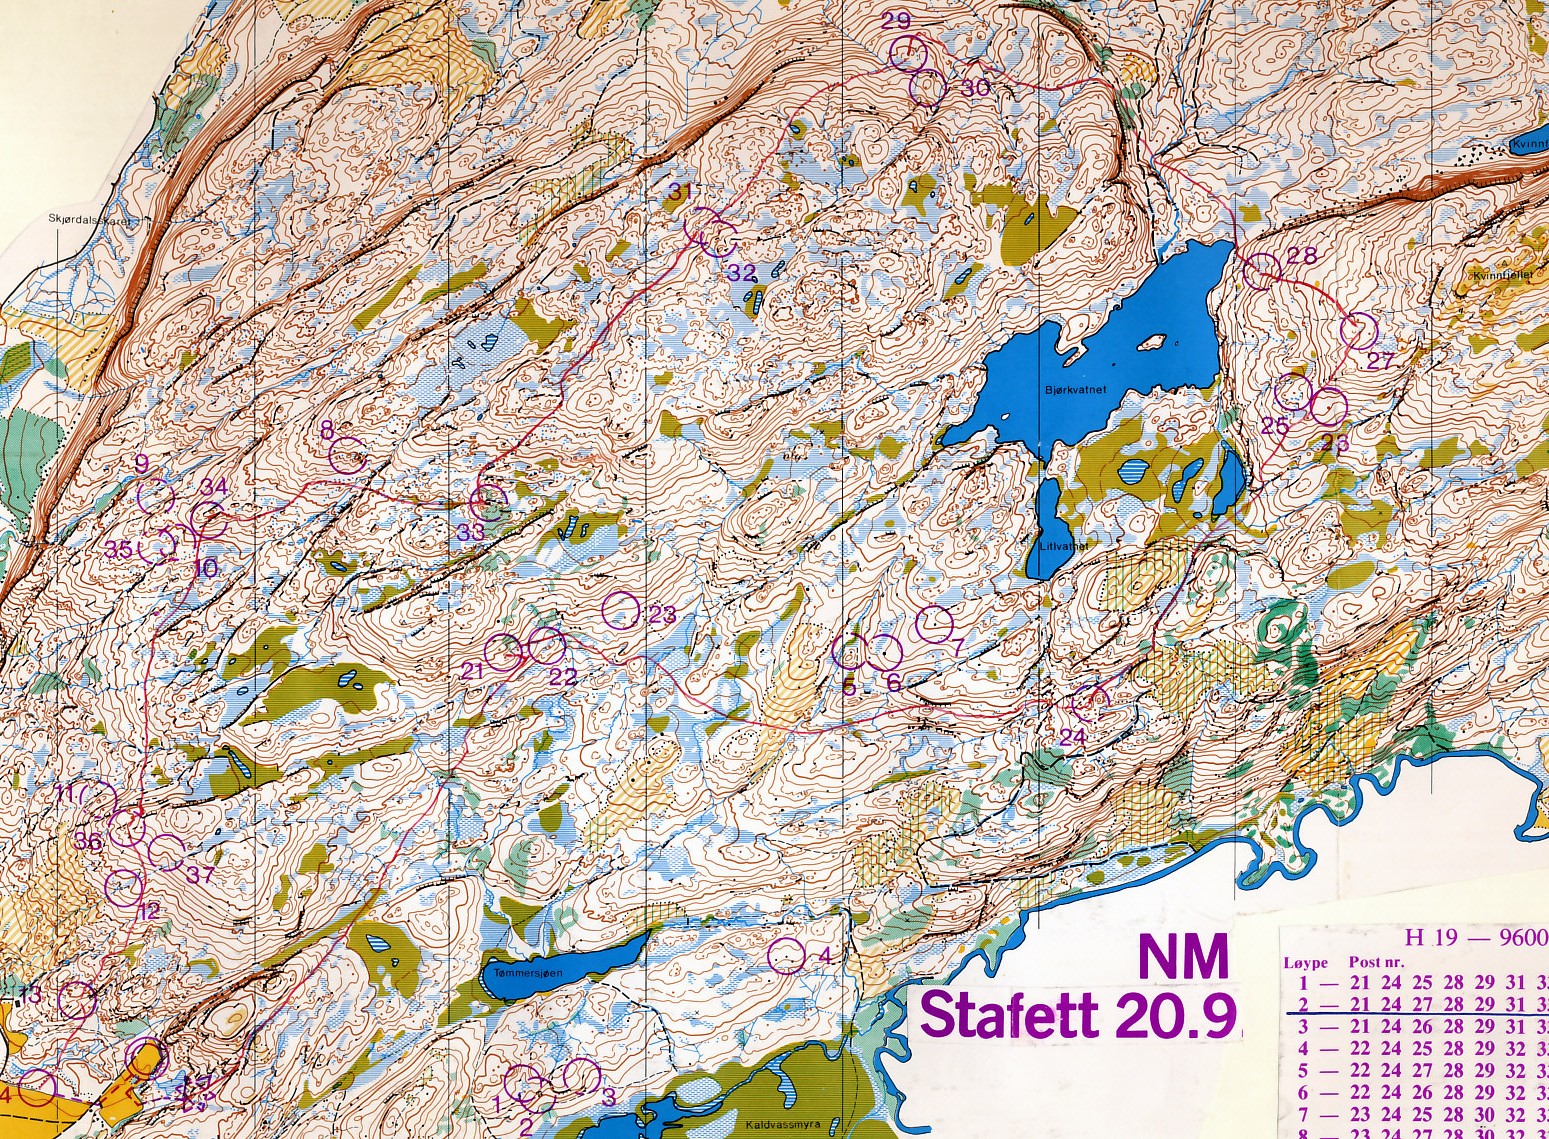 NM stafett, Verdal (1981-09-21)